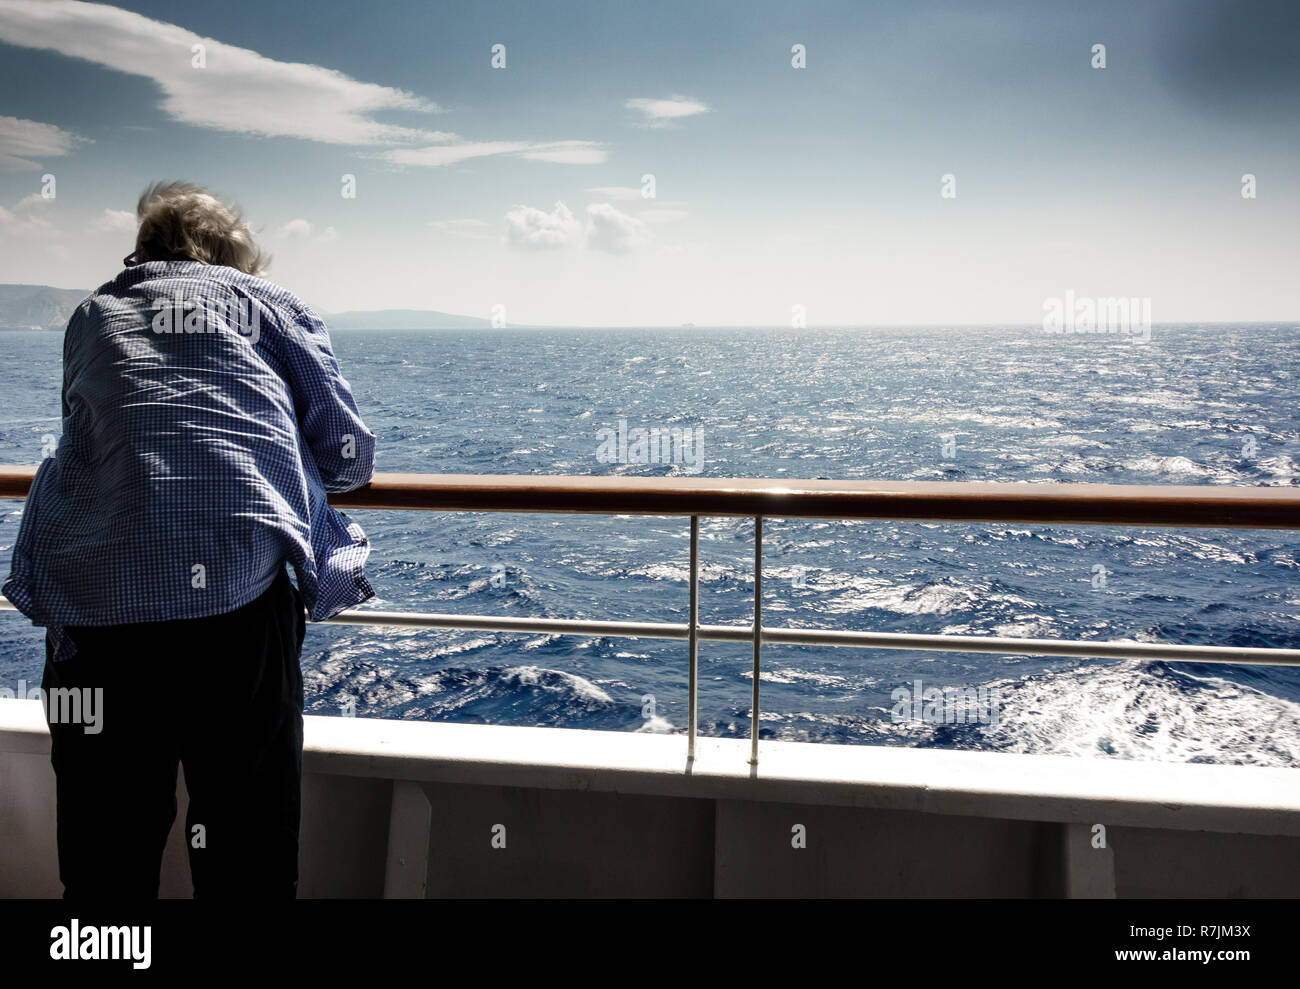 Rear view of senior man on ship Stock Photo